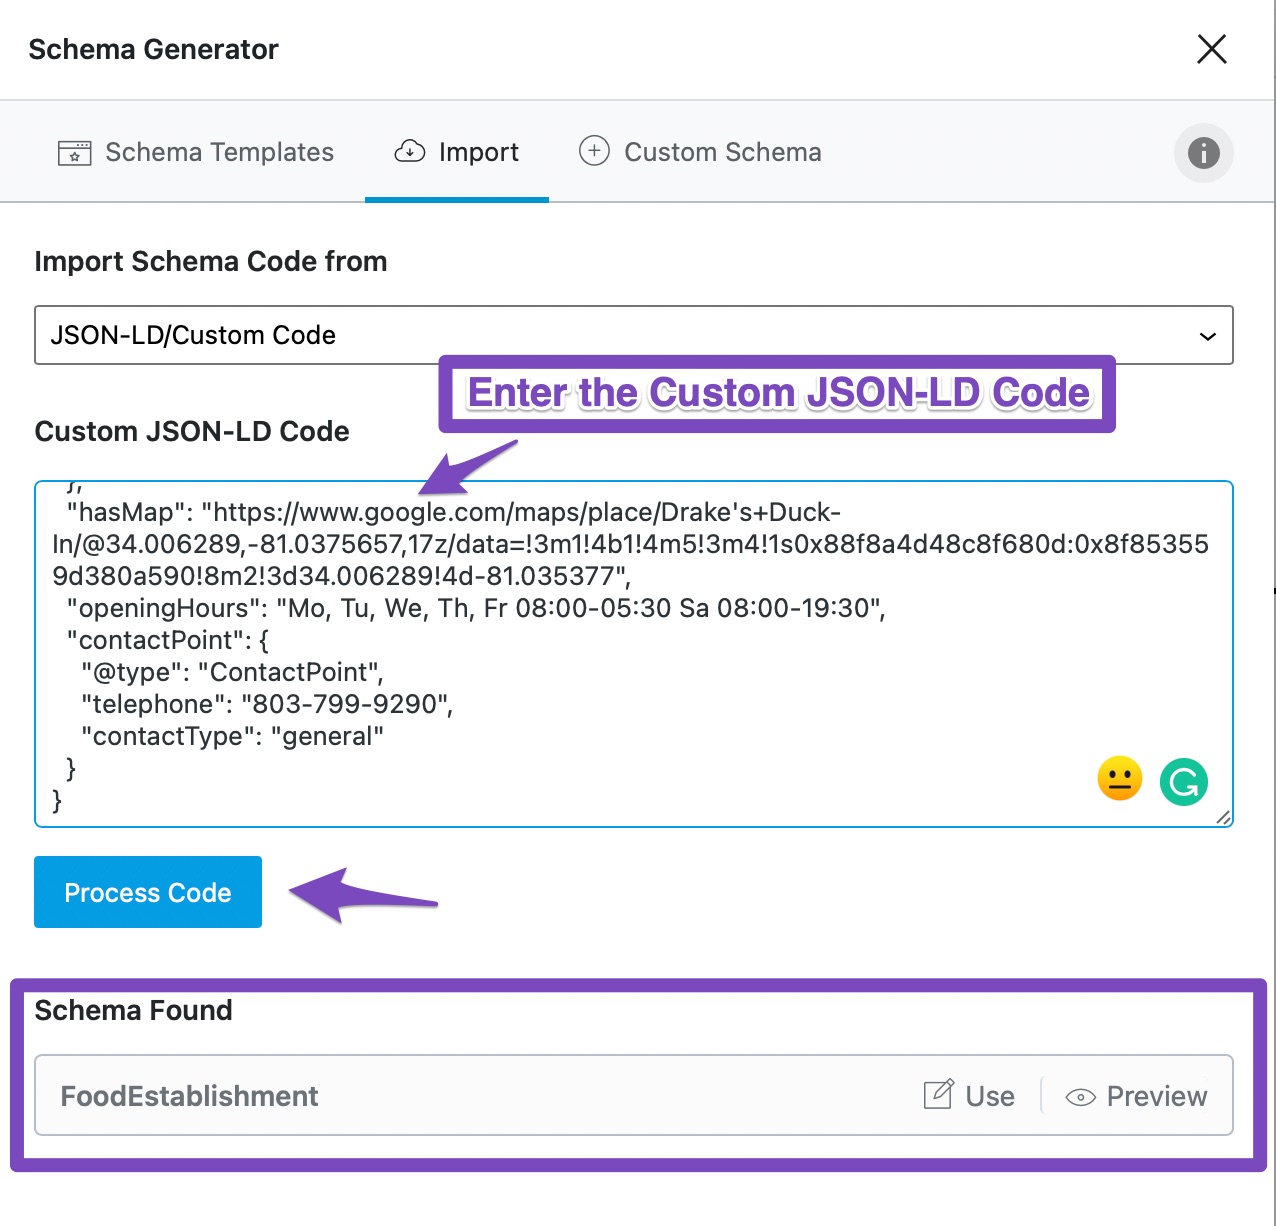 Enter JSON-LD/ Custom Code